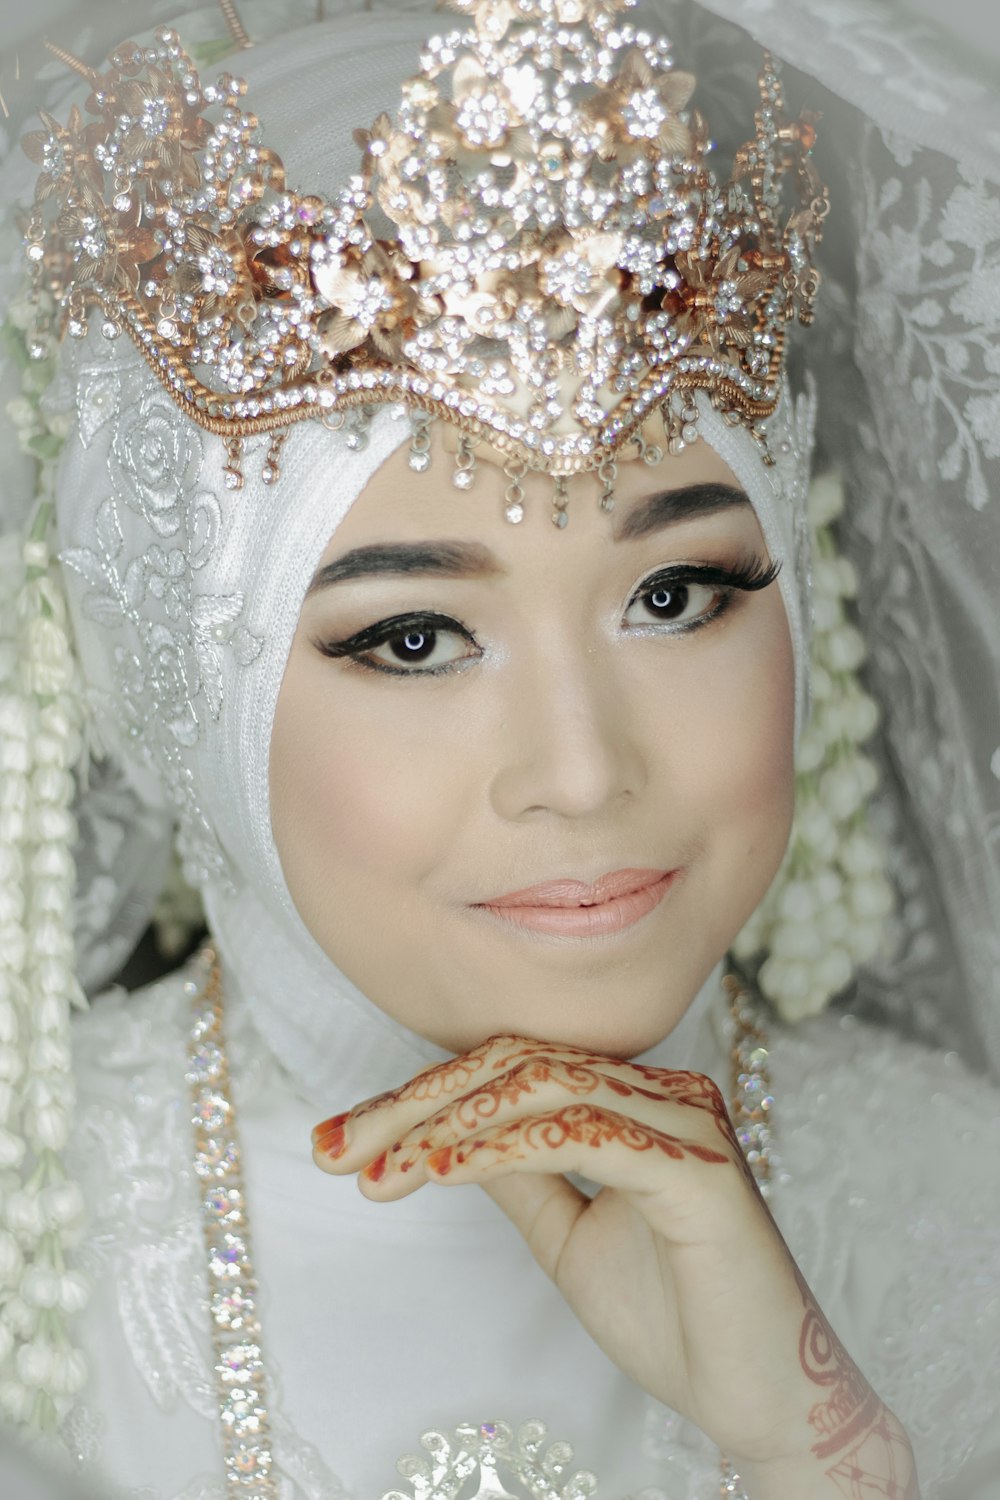 a woman wearing a white veil and a tiara